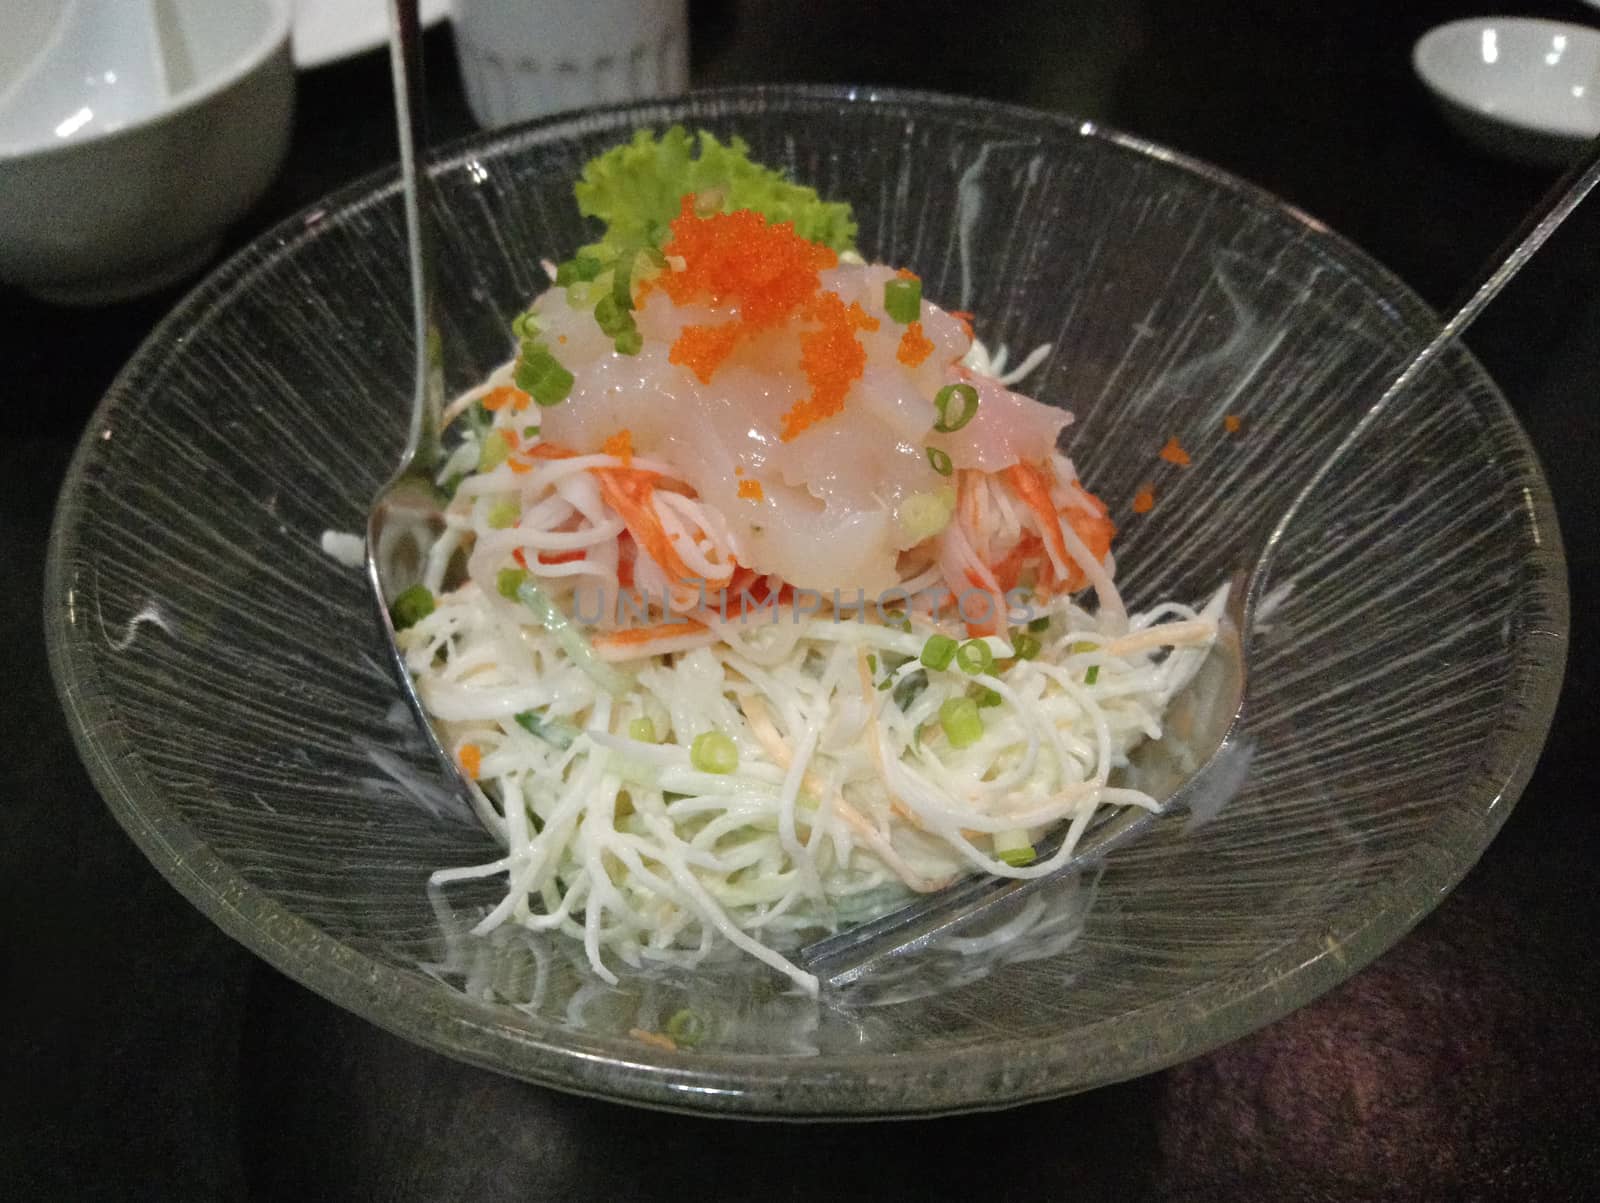 Kani salad place in bowl Japanese cuisine serve in restaurant